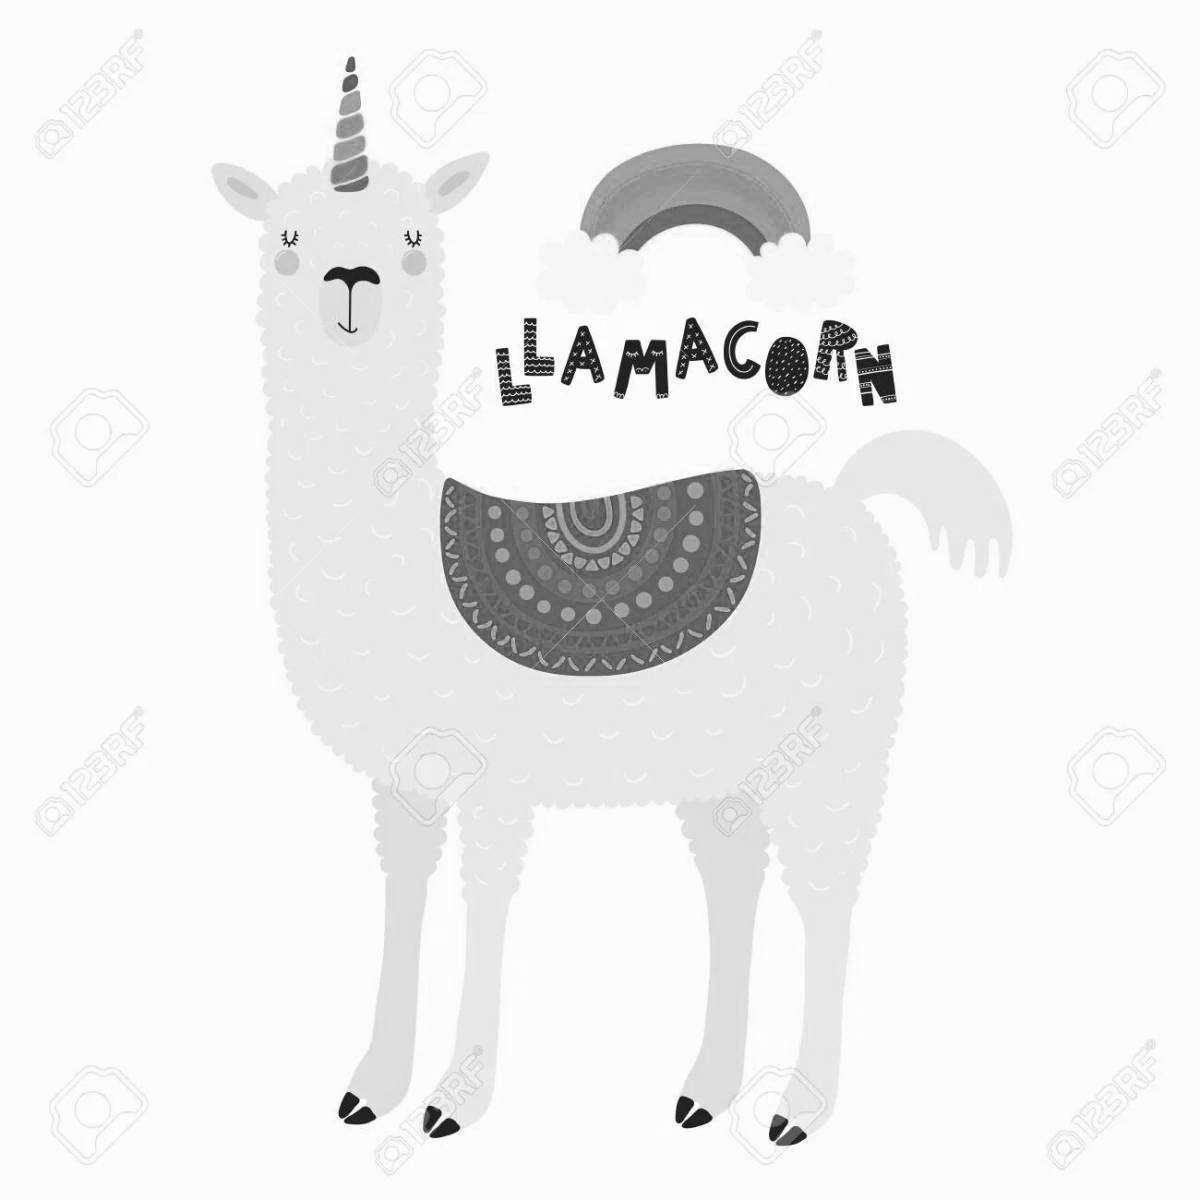 Charming llama unicorn coloring book